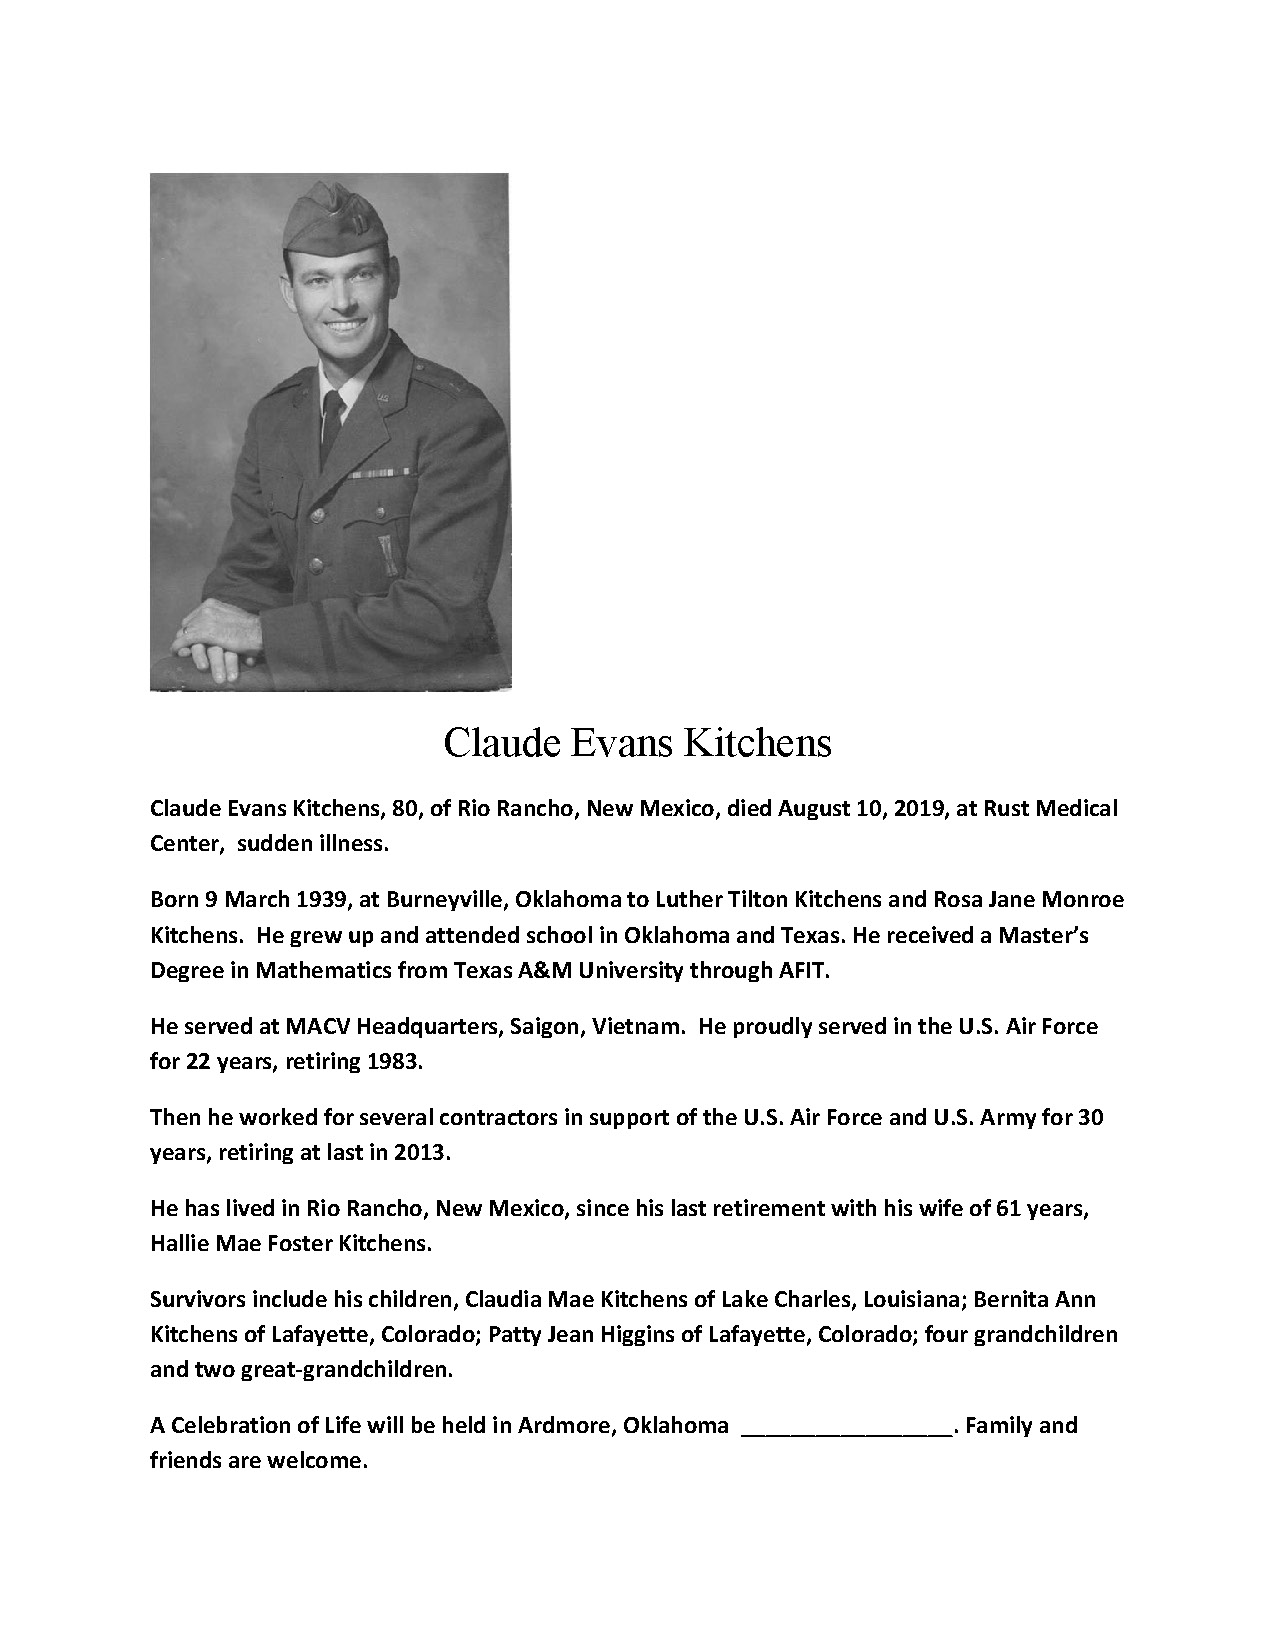 Claude Kitchens Obituary Photo 1